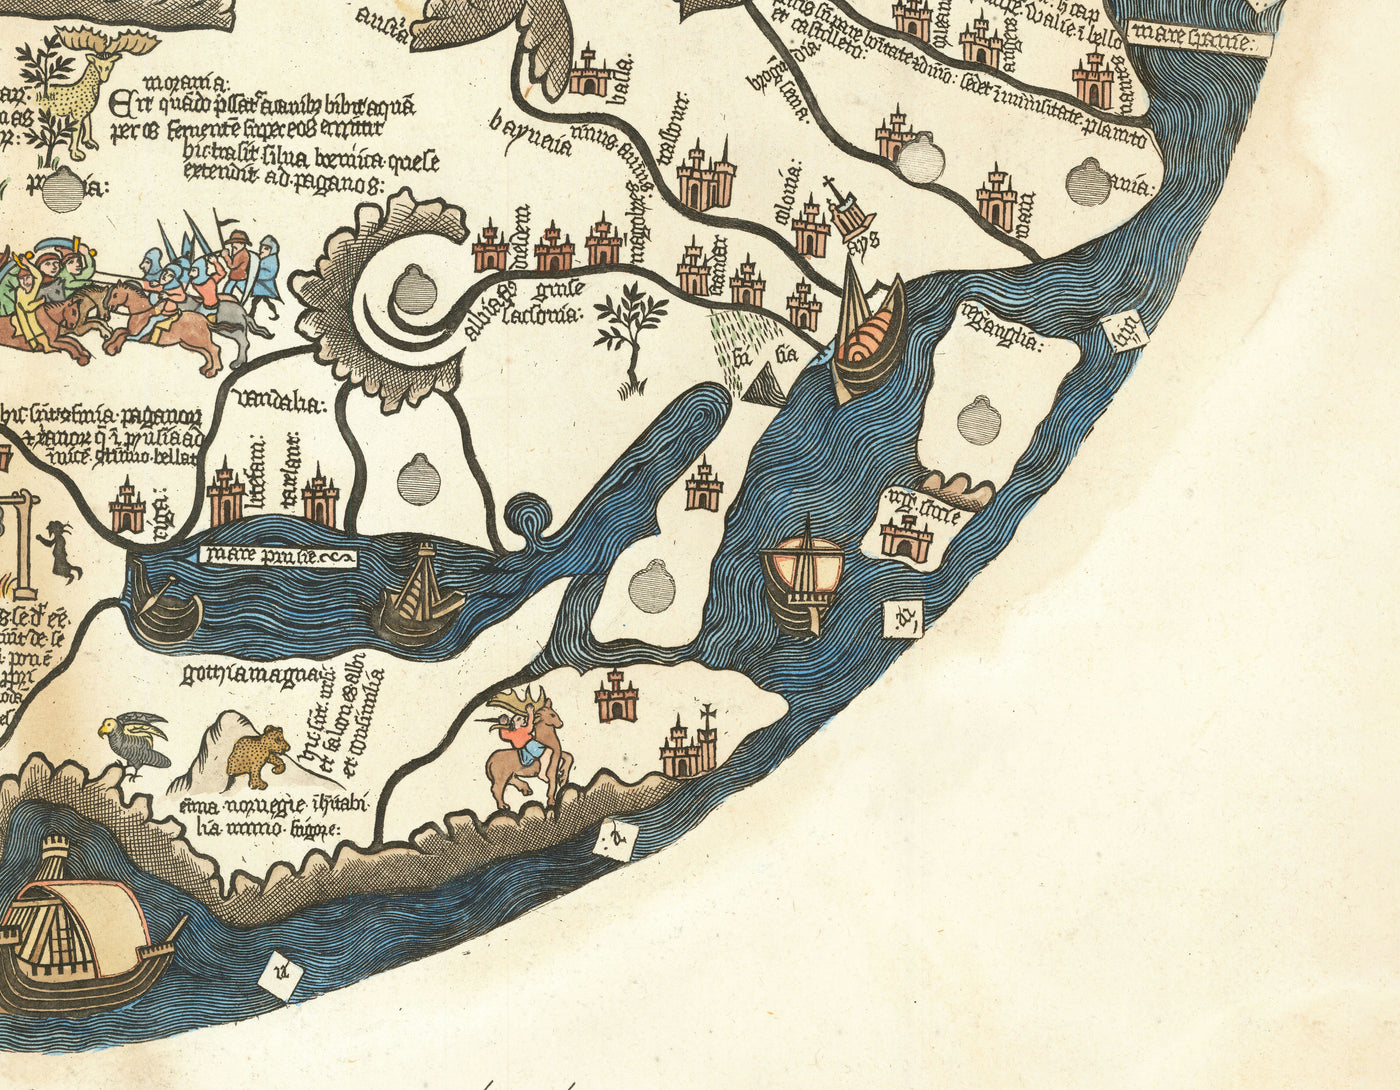 Antiguo Borgia Mappa Mundi, 1450 - Atlas del Mundo Antiguo - Europa, Oriente Medio, Norte de África, Mediterráneo